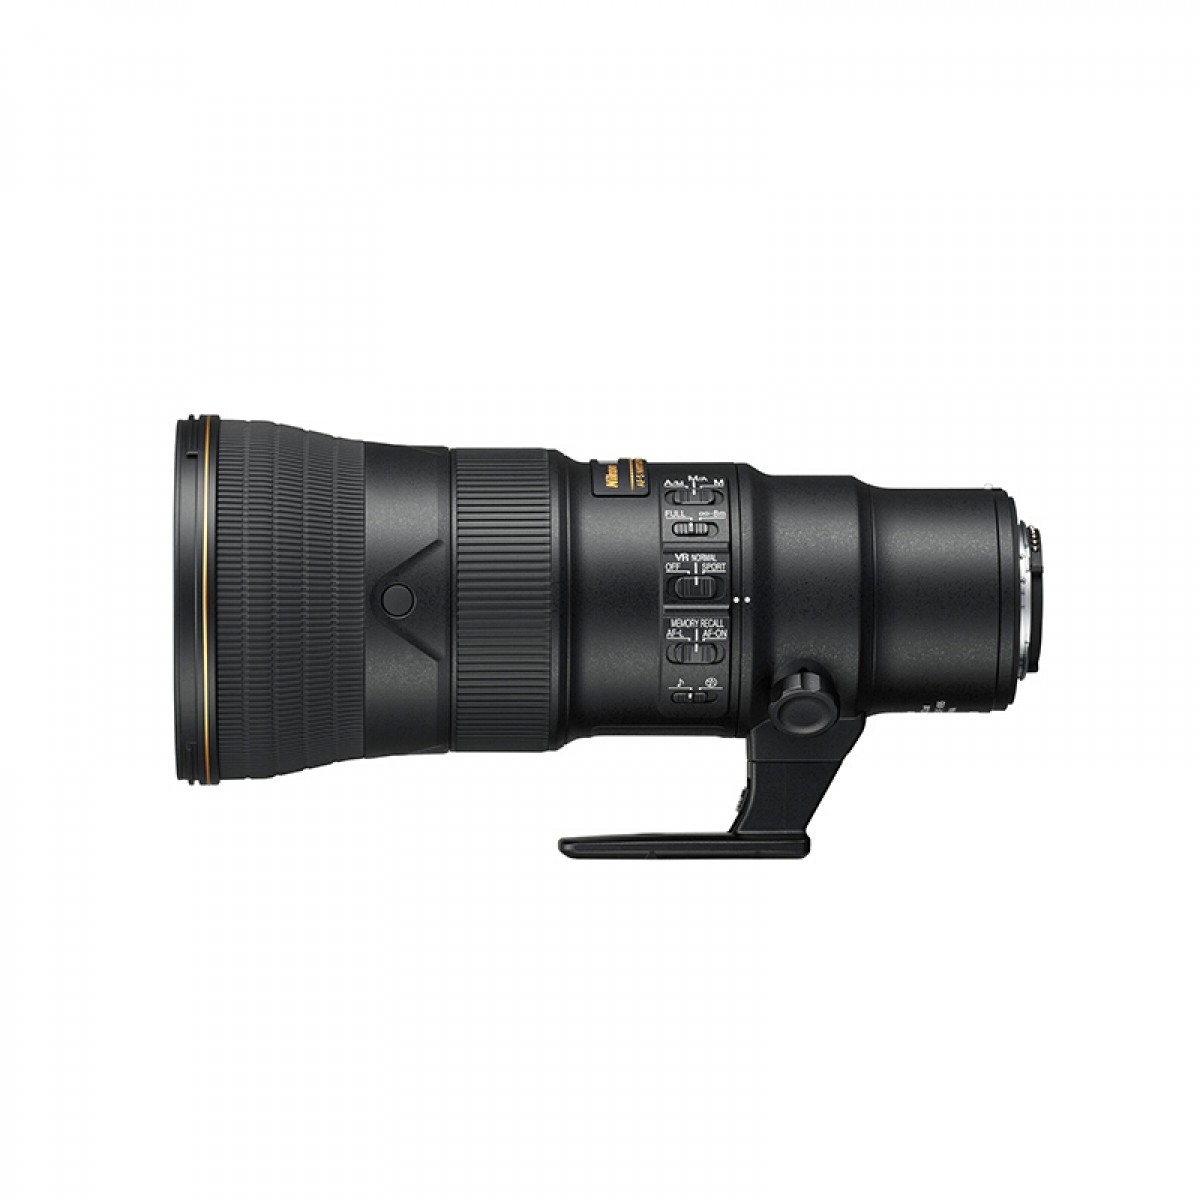 尼康单反镜头AF-S 尼克尔 500mm f/5.6E PF ED VR镜头500定焦